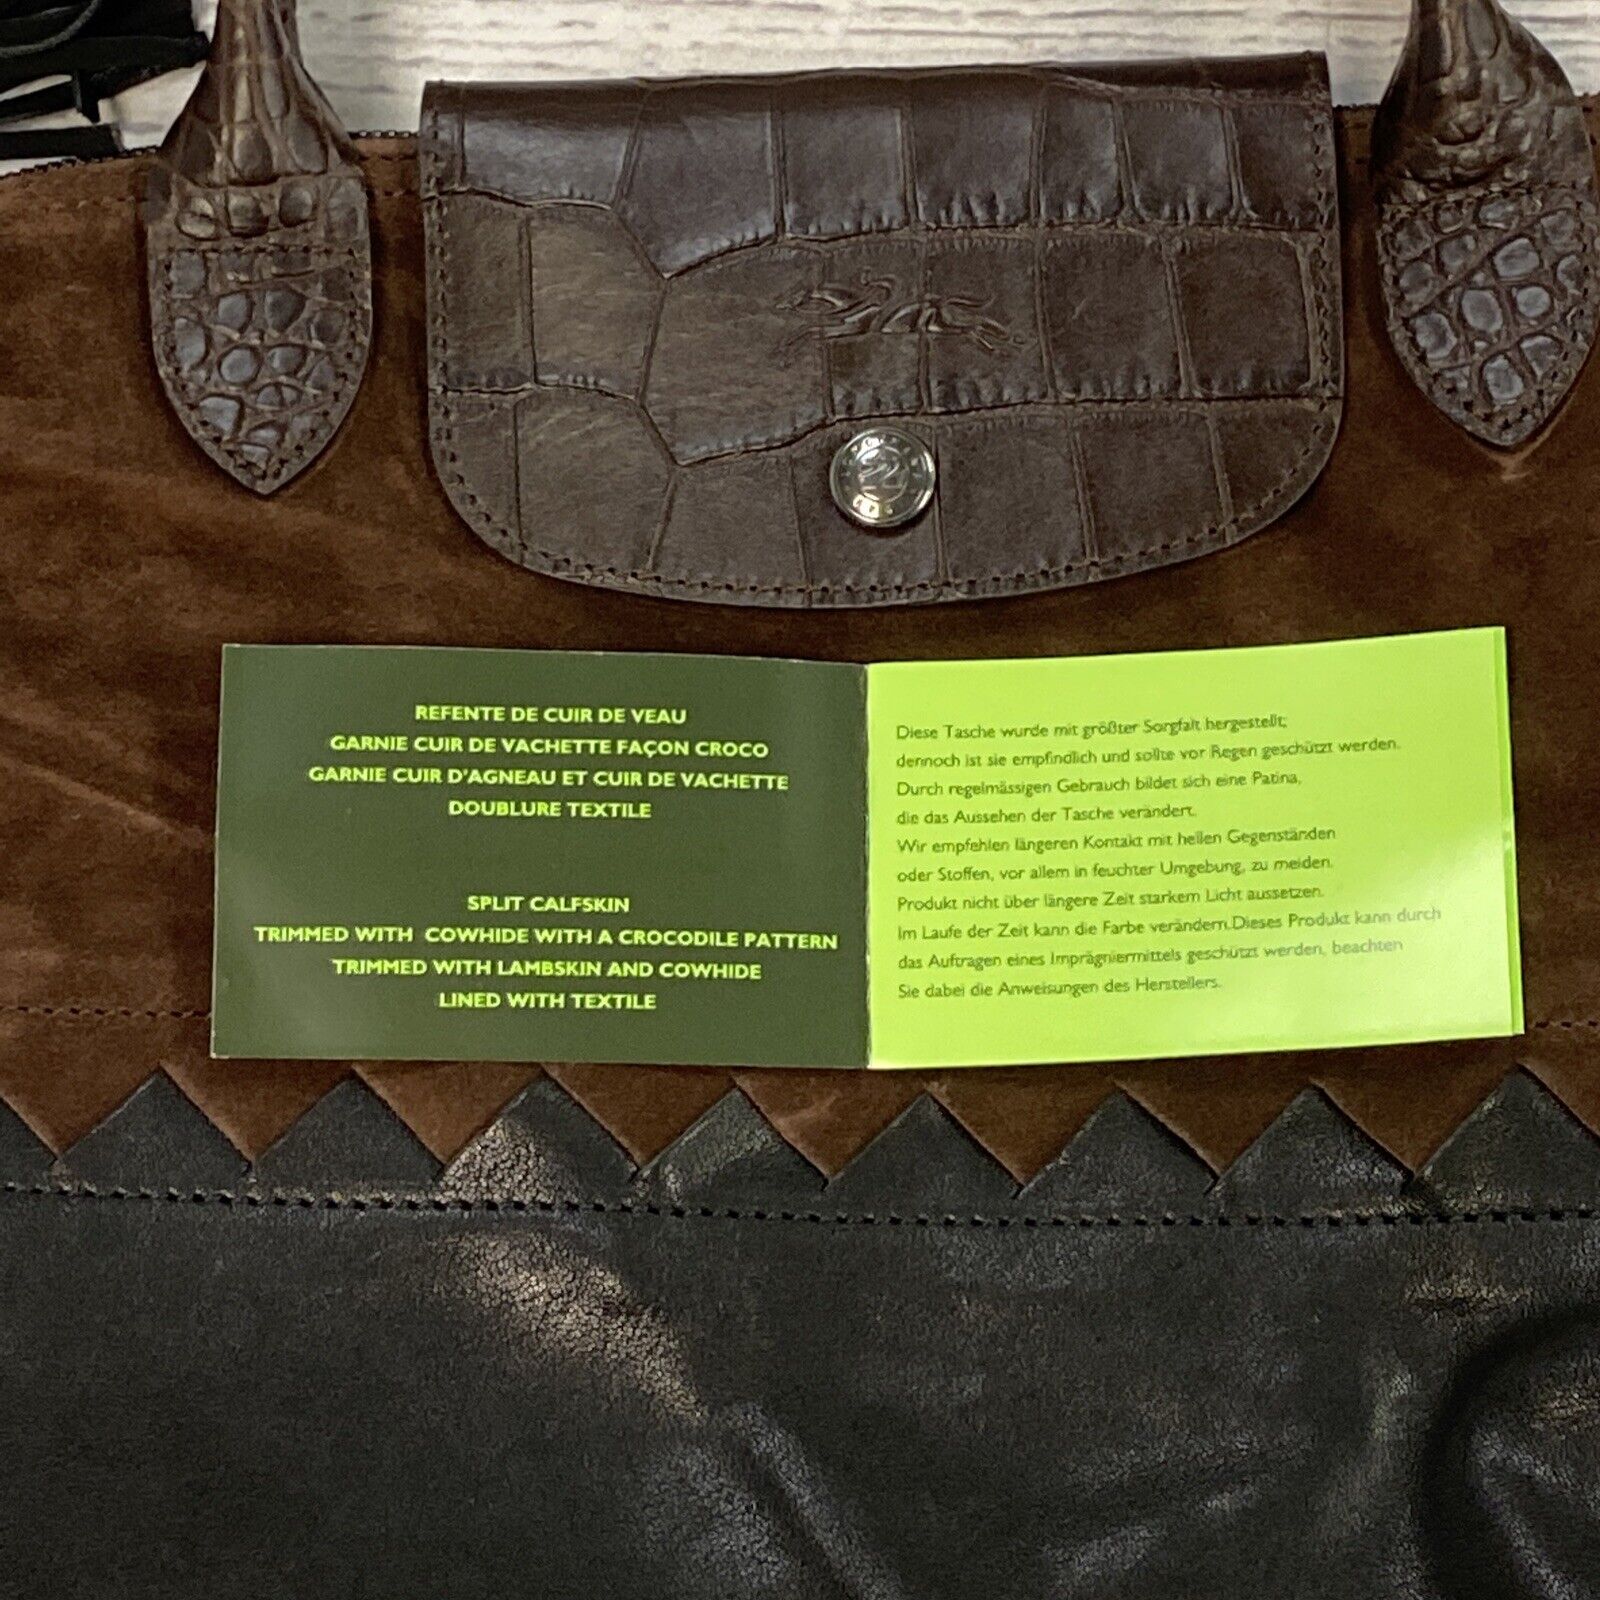 Louis Vuitton's Small Medium Box & Dust Bag - beyond exchange